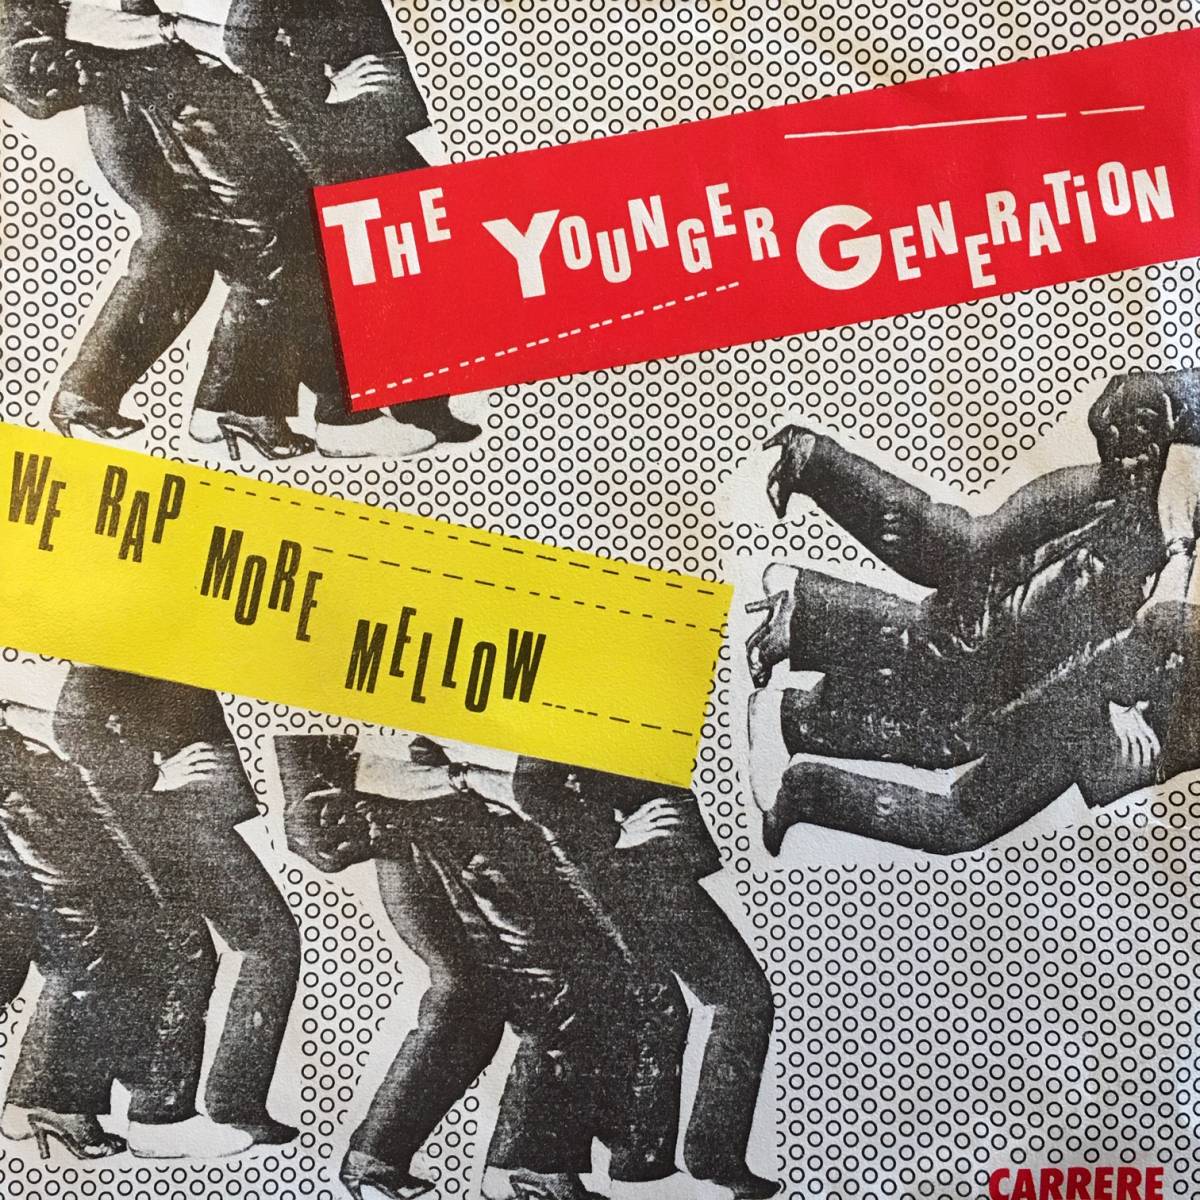 The Younger Generation - We Rap More Mellow * organ bar Sabar Via free soul Kubota takesimuro small west ..funk45 rare glue vu